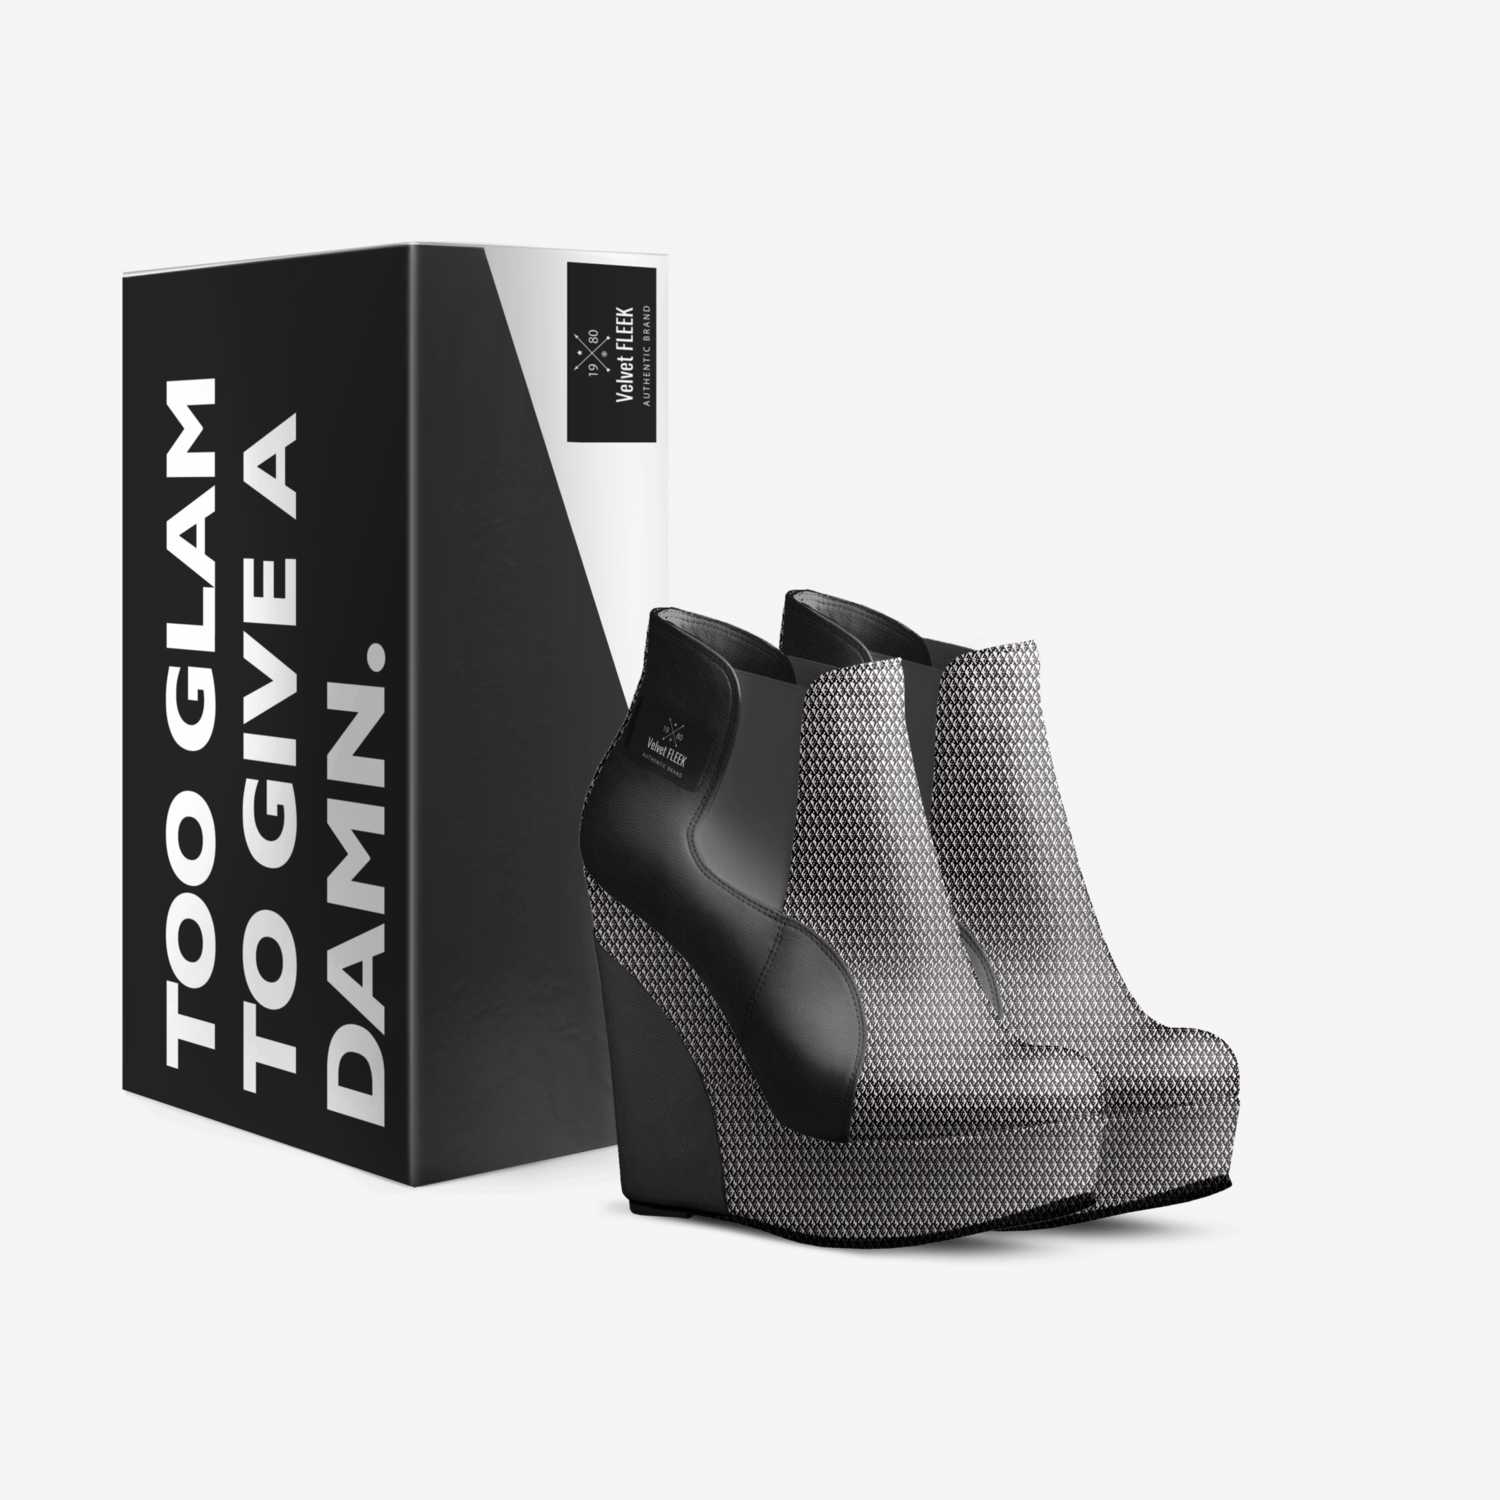 Velvet FLEEK custom made in Italy shoes by Shantae Esannason | Box view